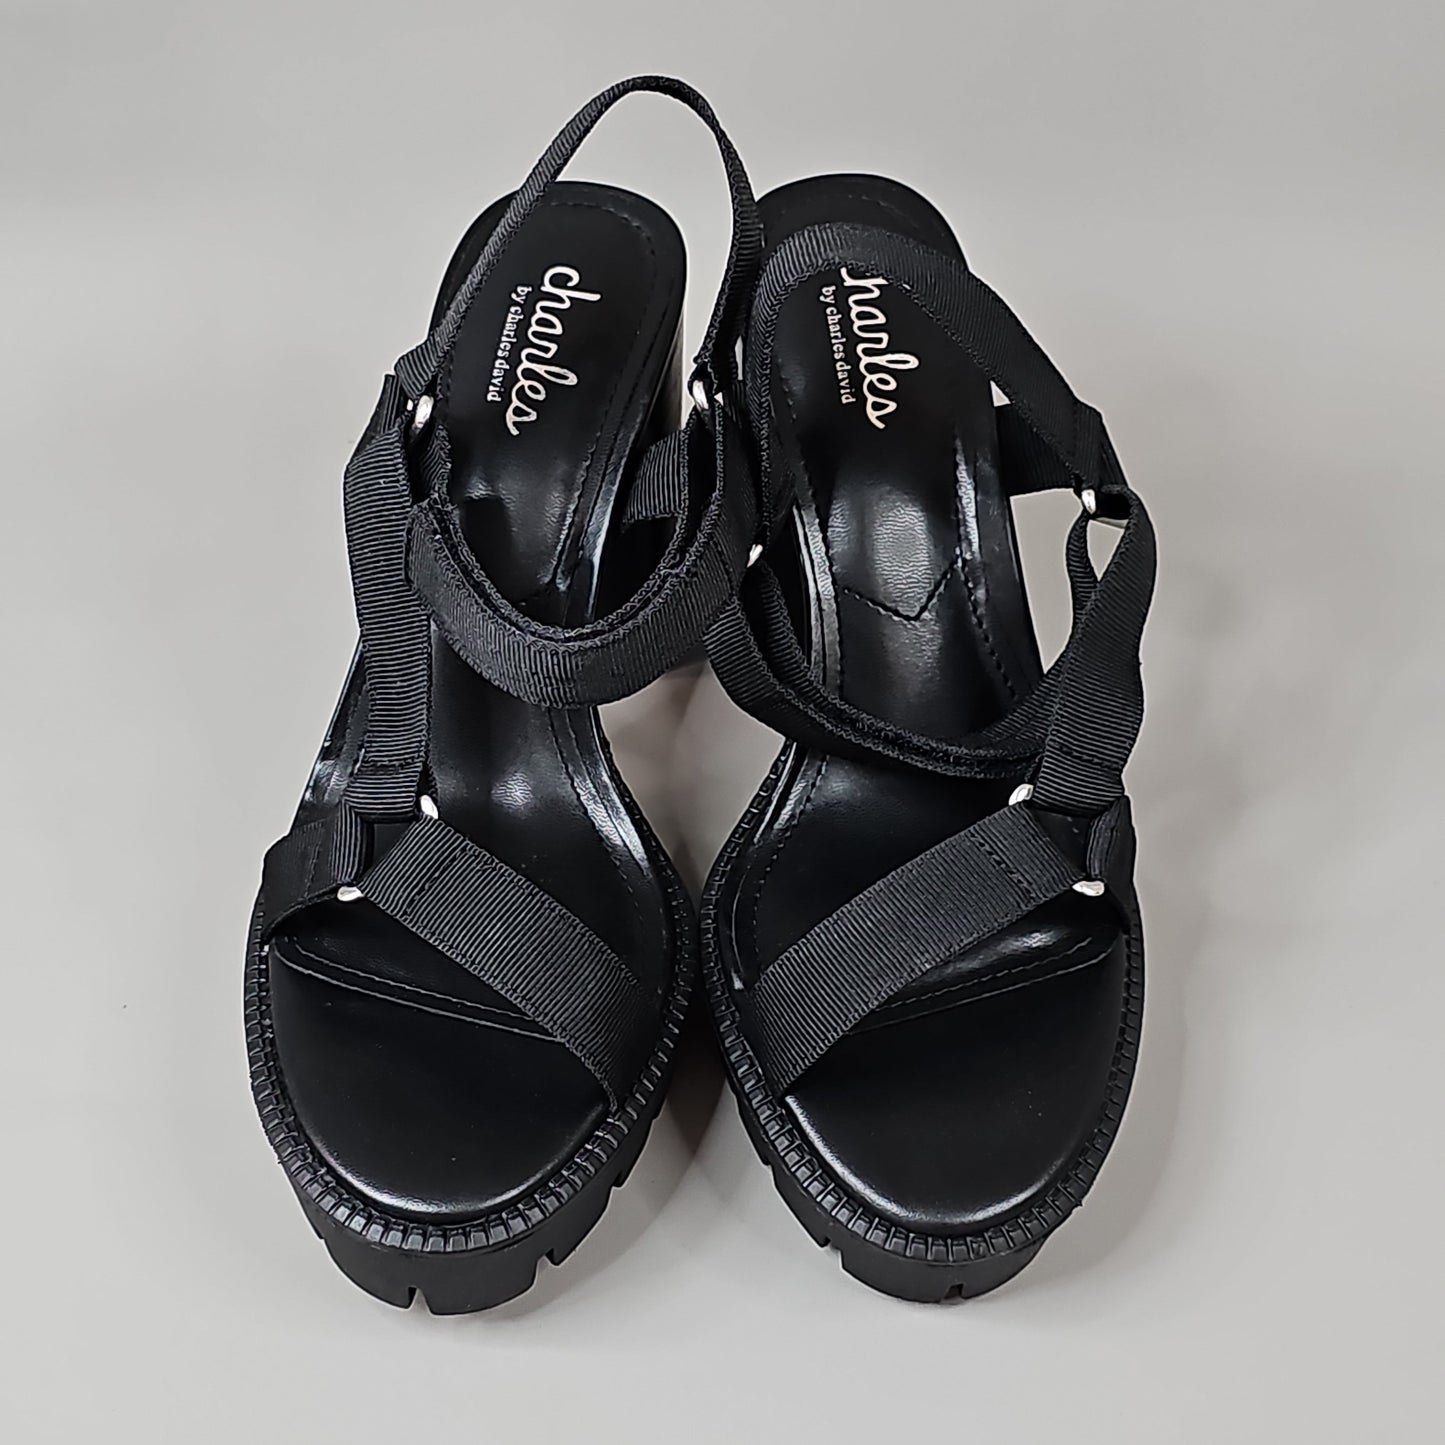 CHARLES BY CHARLES DAVID Women's Vast Sport Sandal Shoe Sz 5 M Black (New)